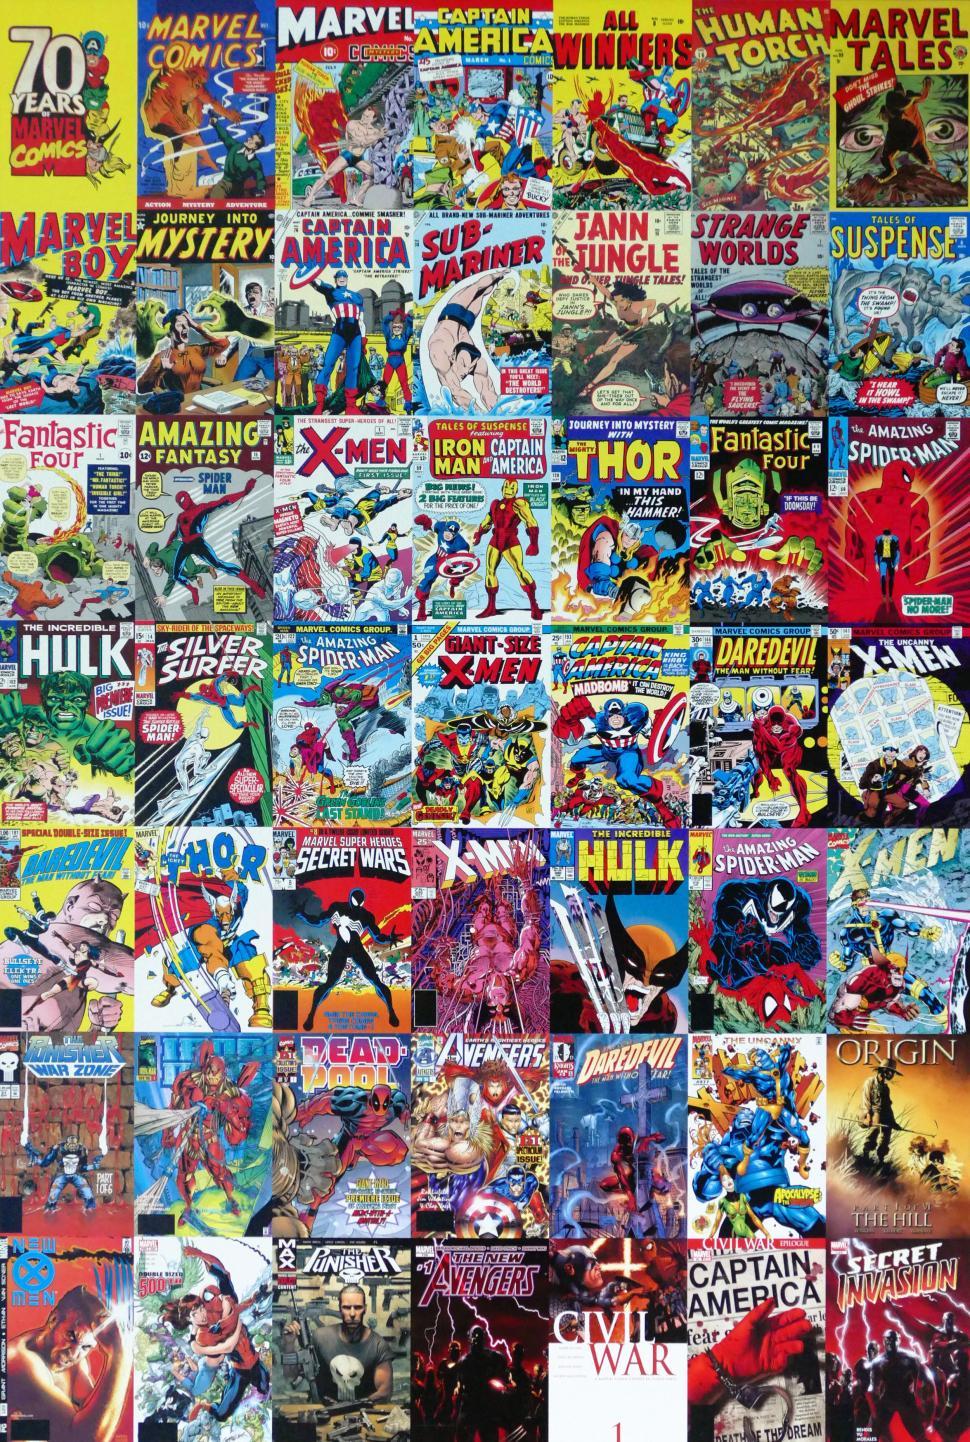 Free Image of Comics Background  